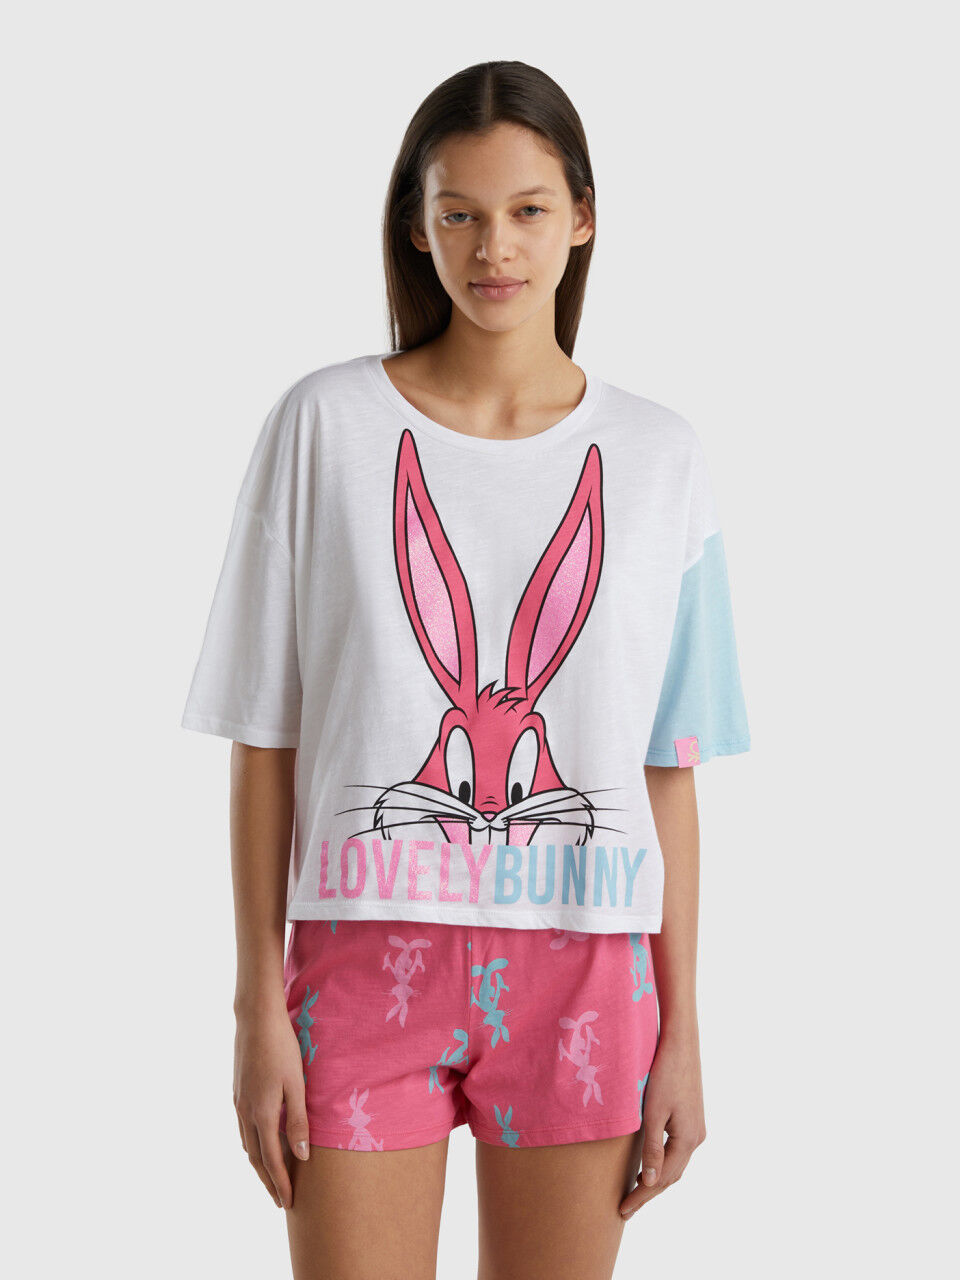 Bugs Bunny-Shirt aus leichter Baumwolle